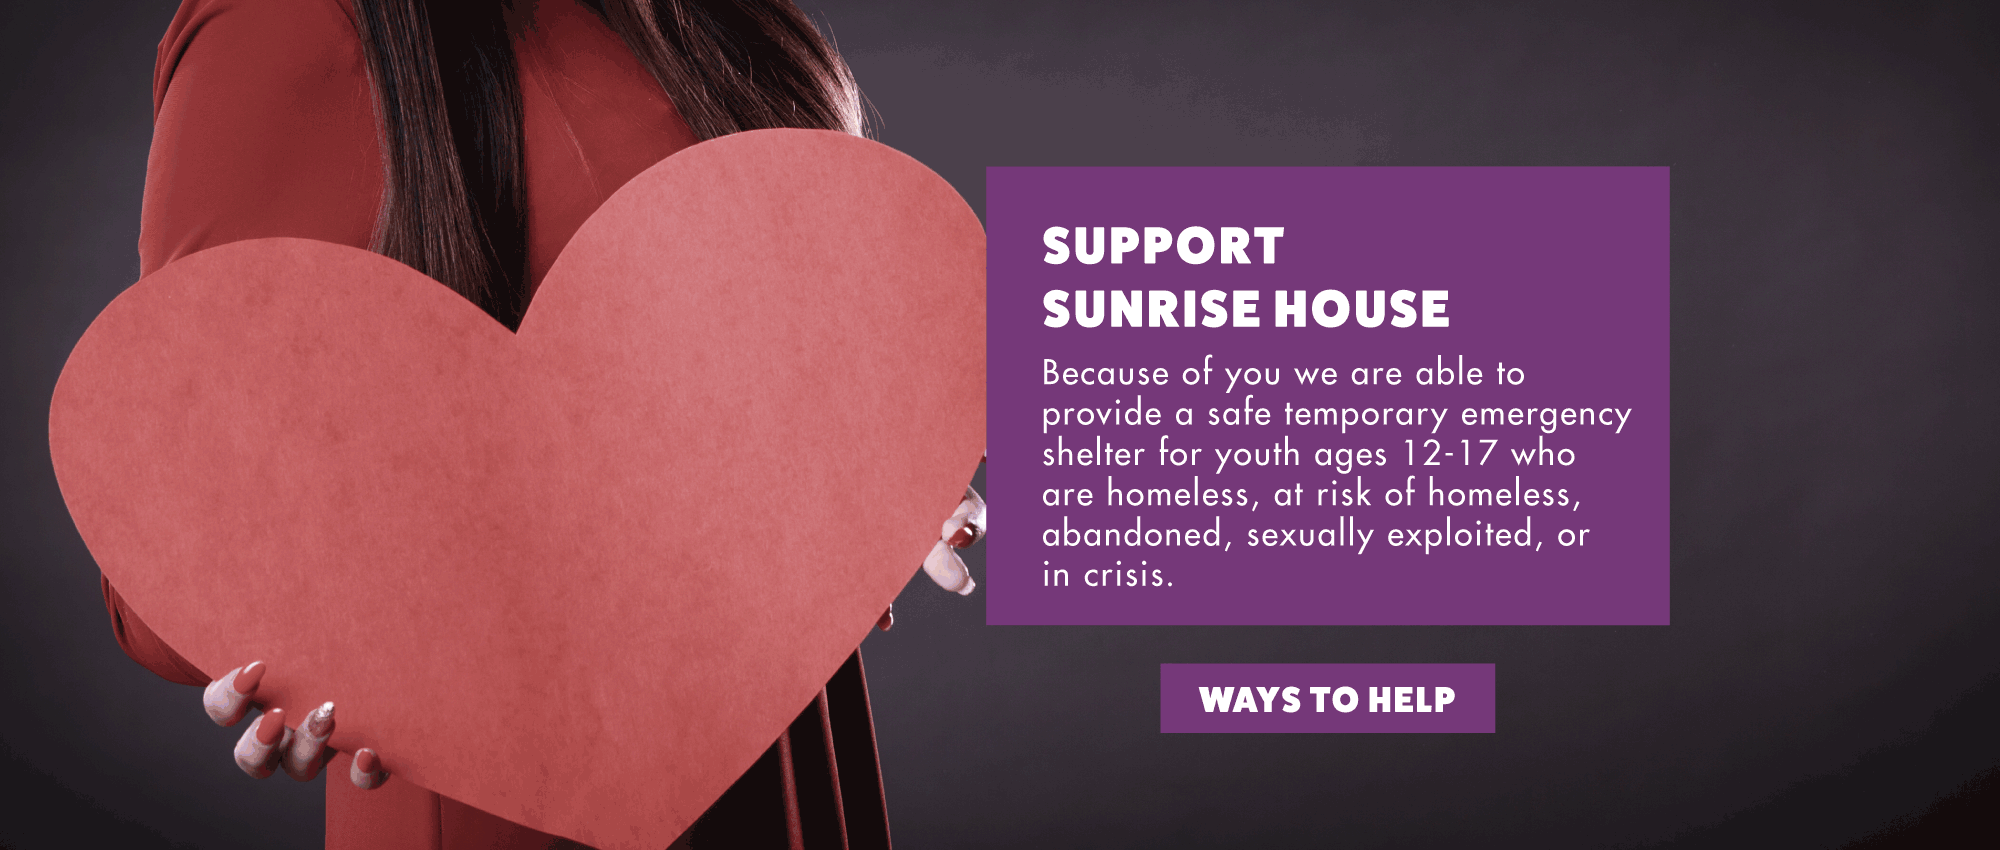 Support Sunrise House